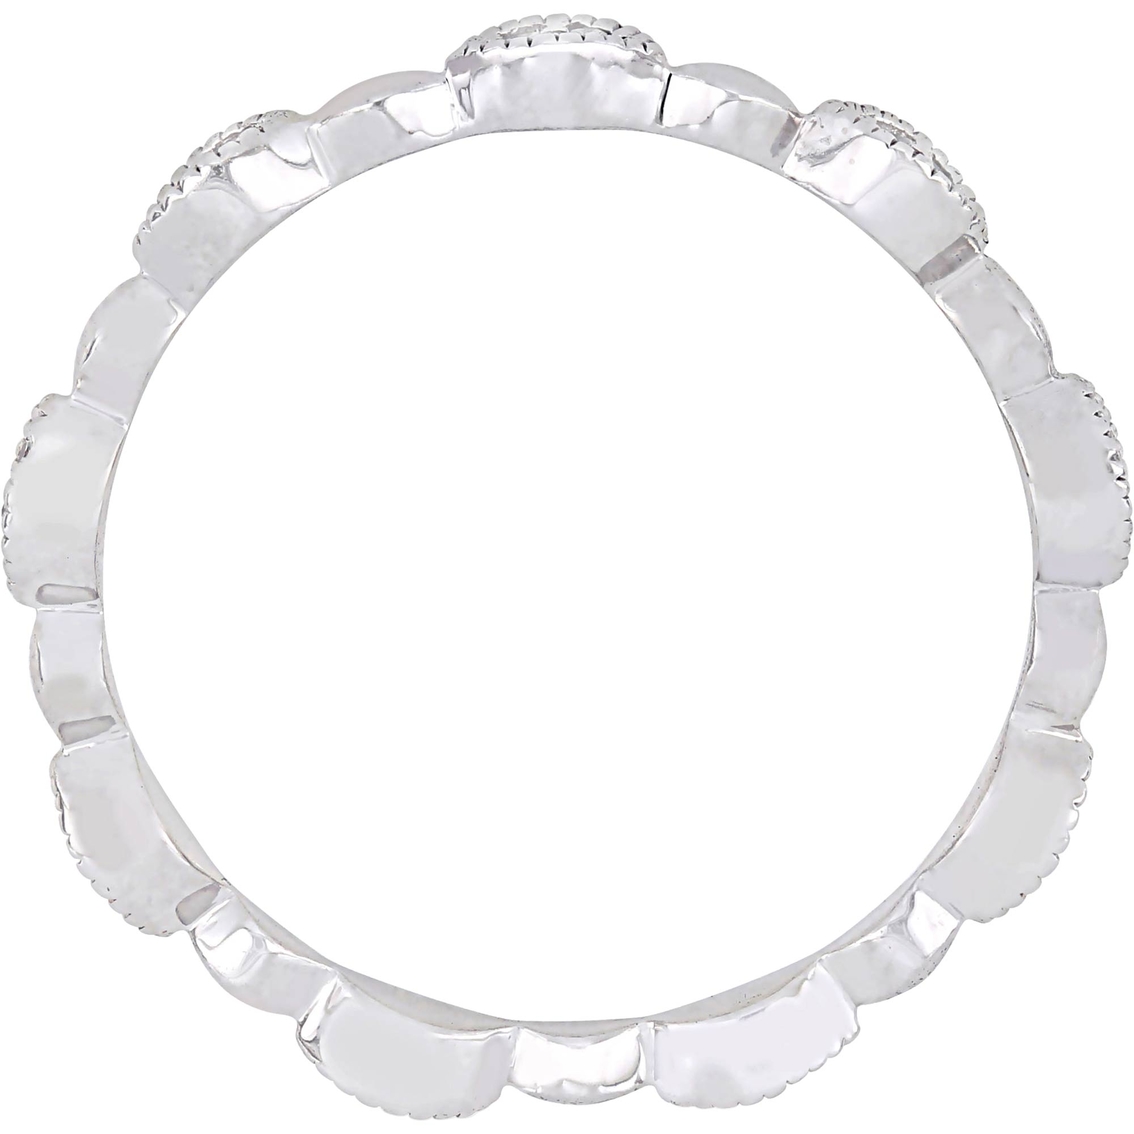 1/10 CT TW Diamond Eternity Ring in 10k White Gold - Image 3 of 4